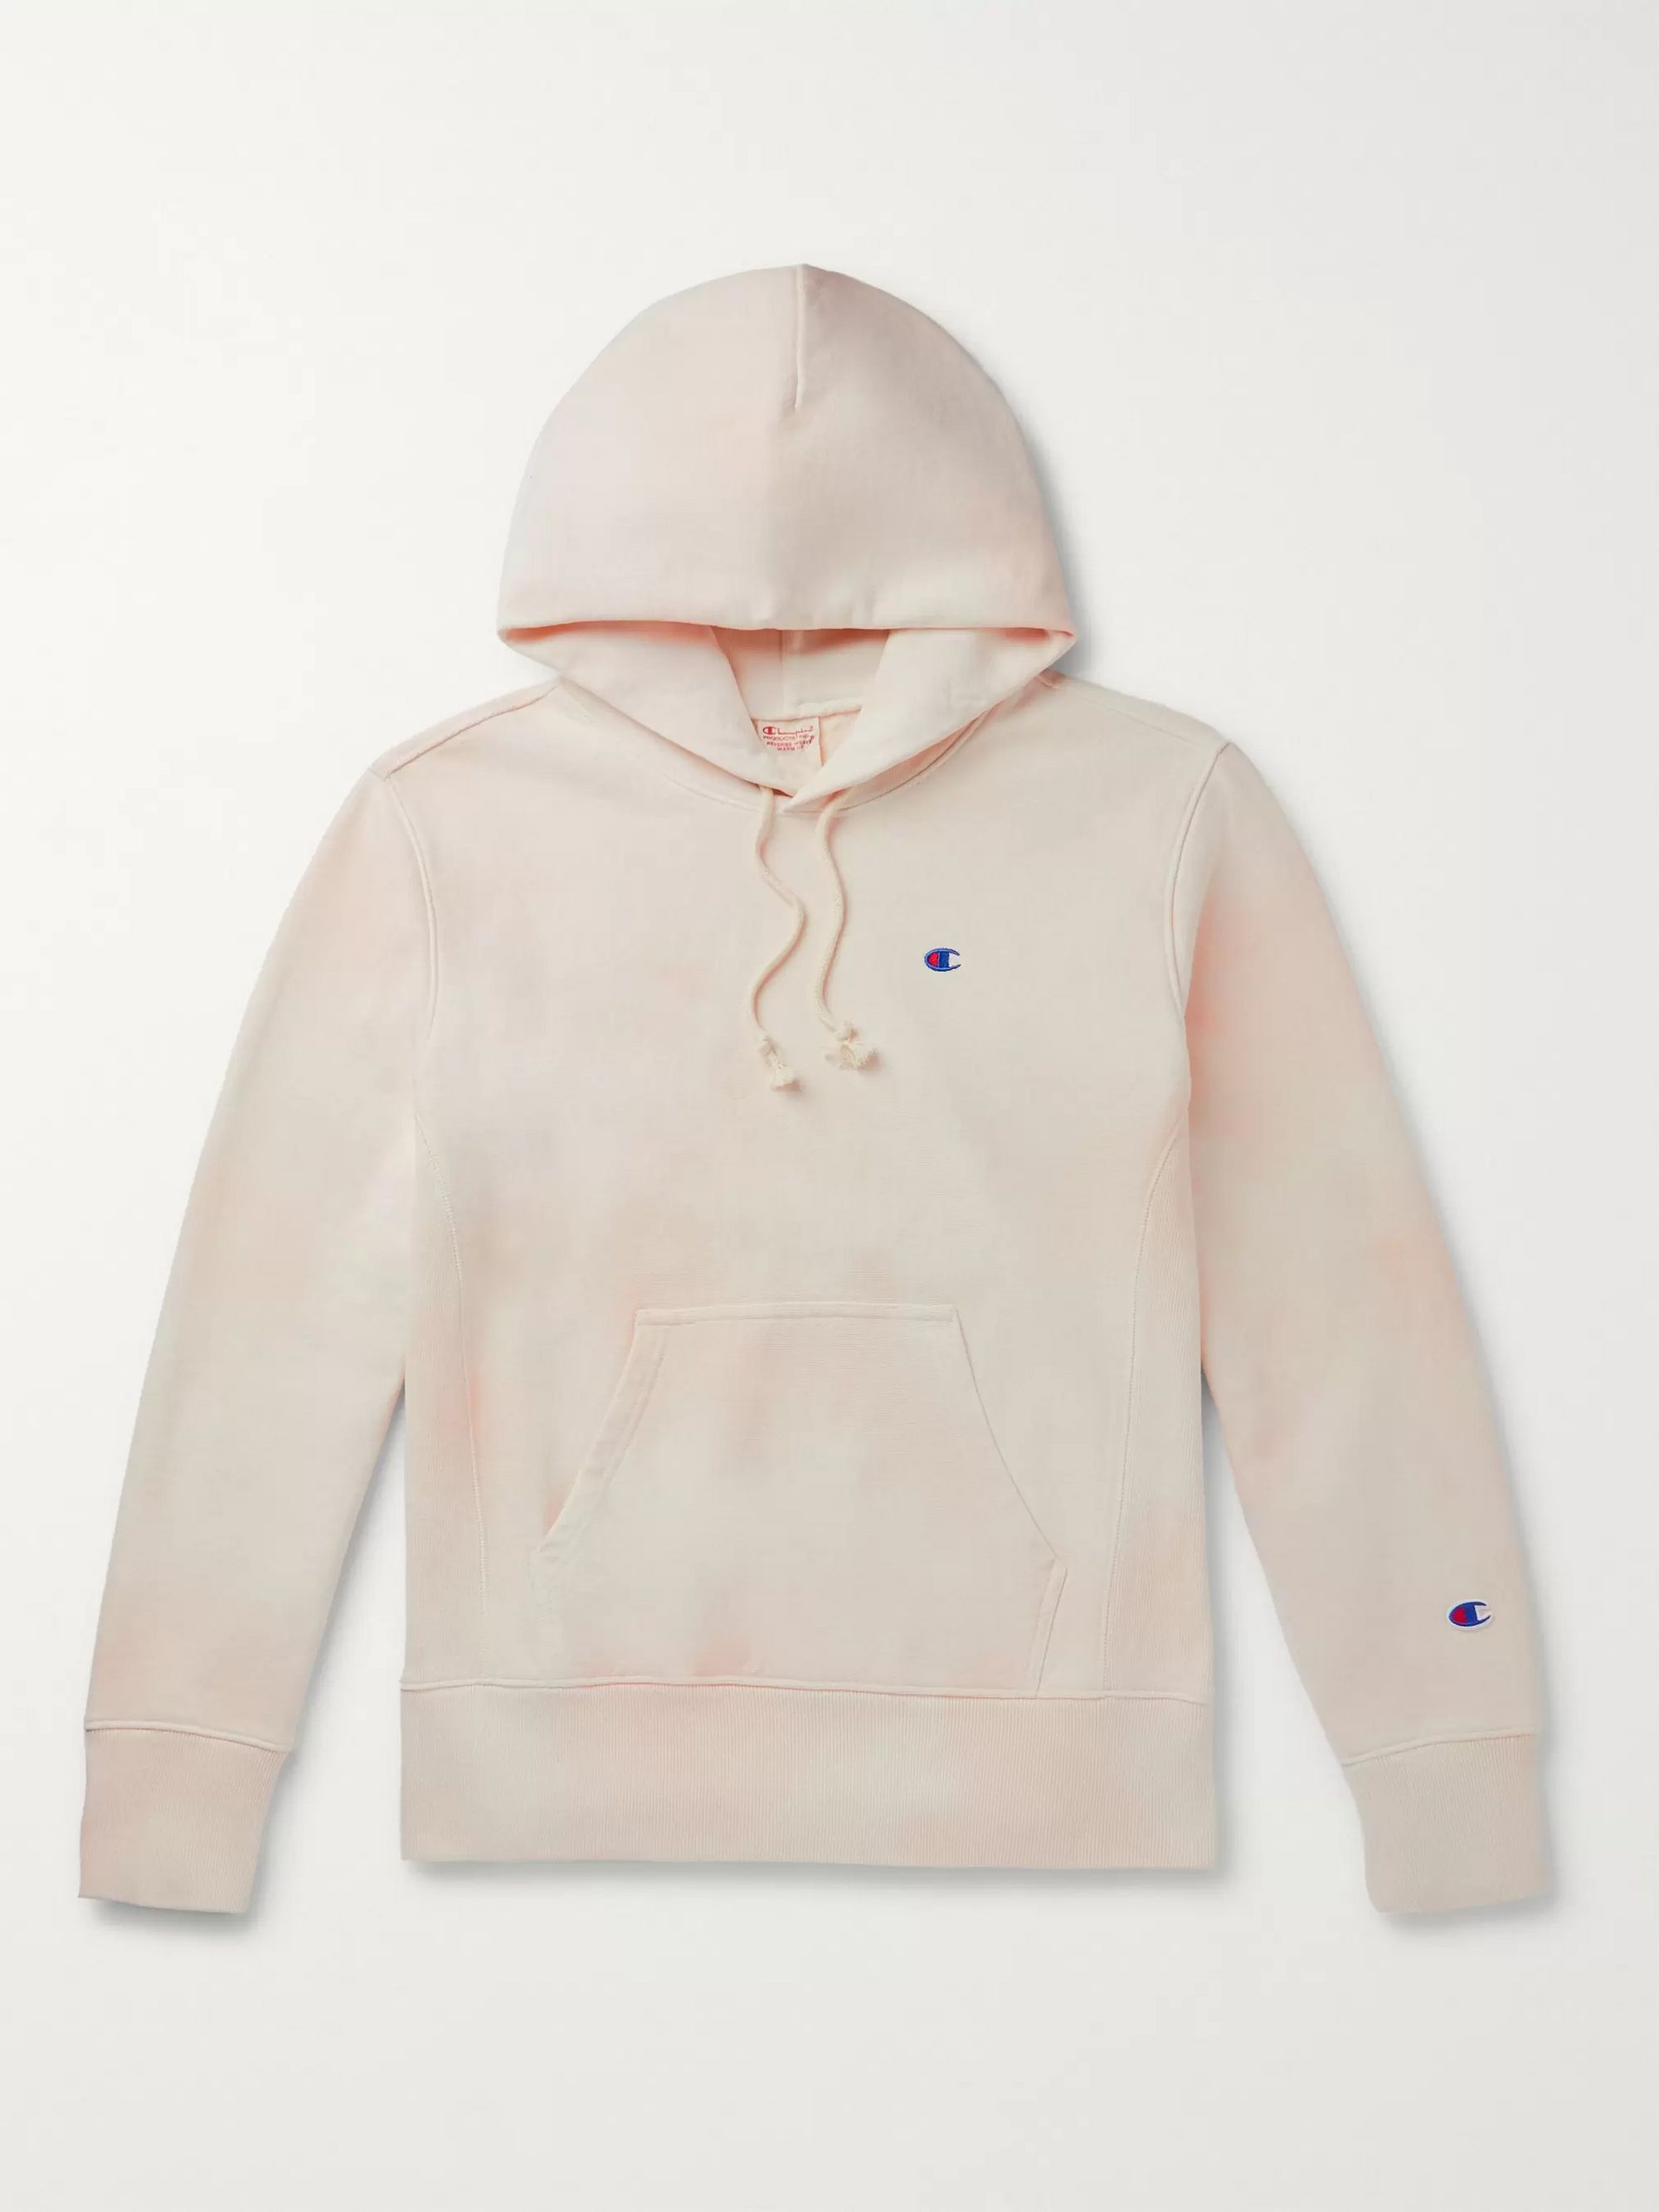 champion hoodie exclusive